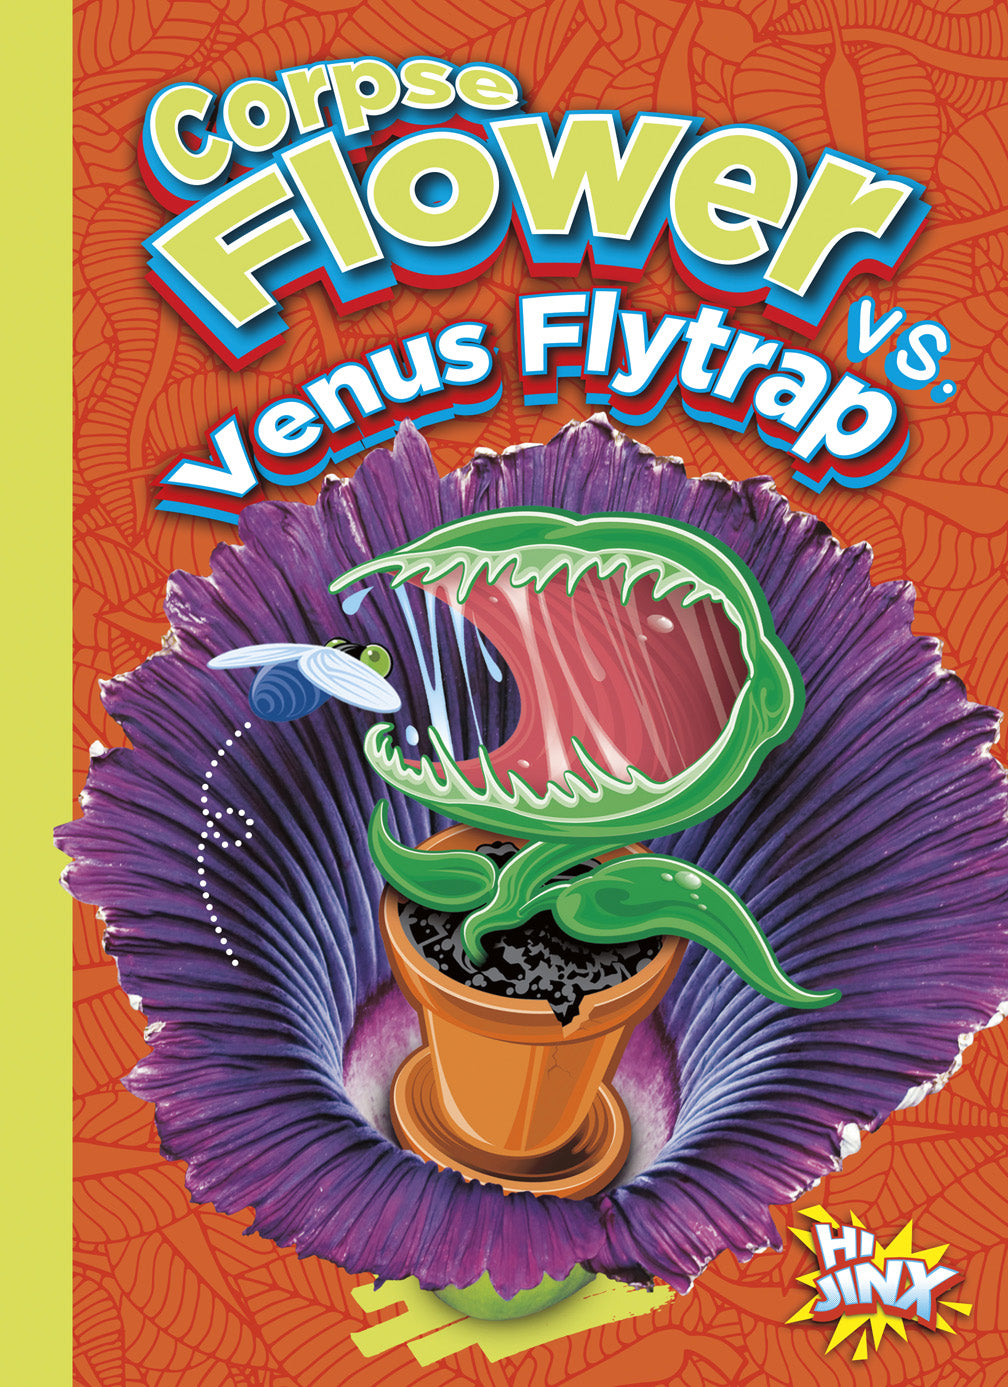 Corpse Flower vs Venus Fly Trap